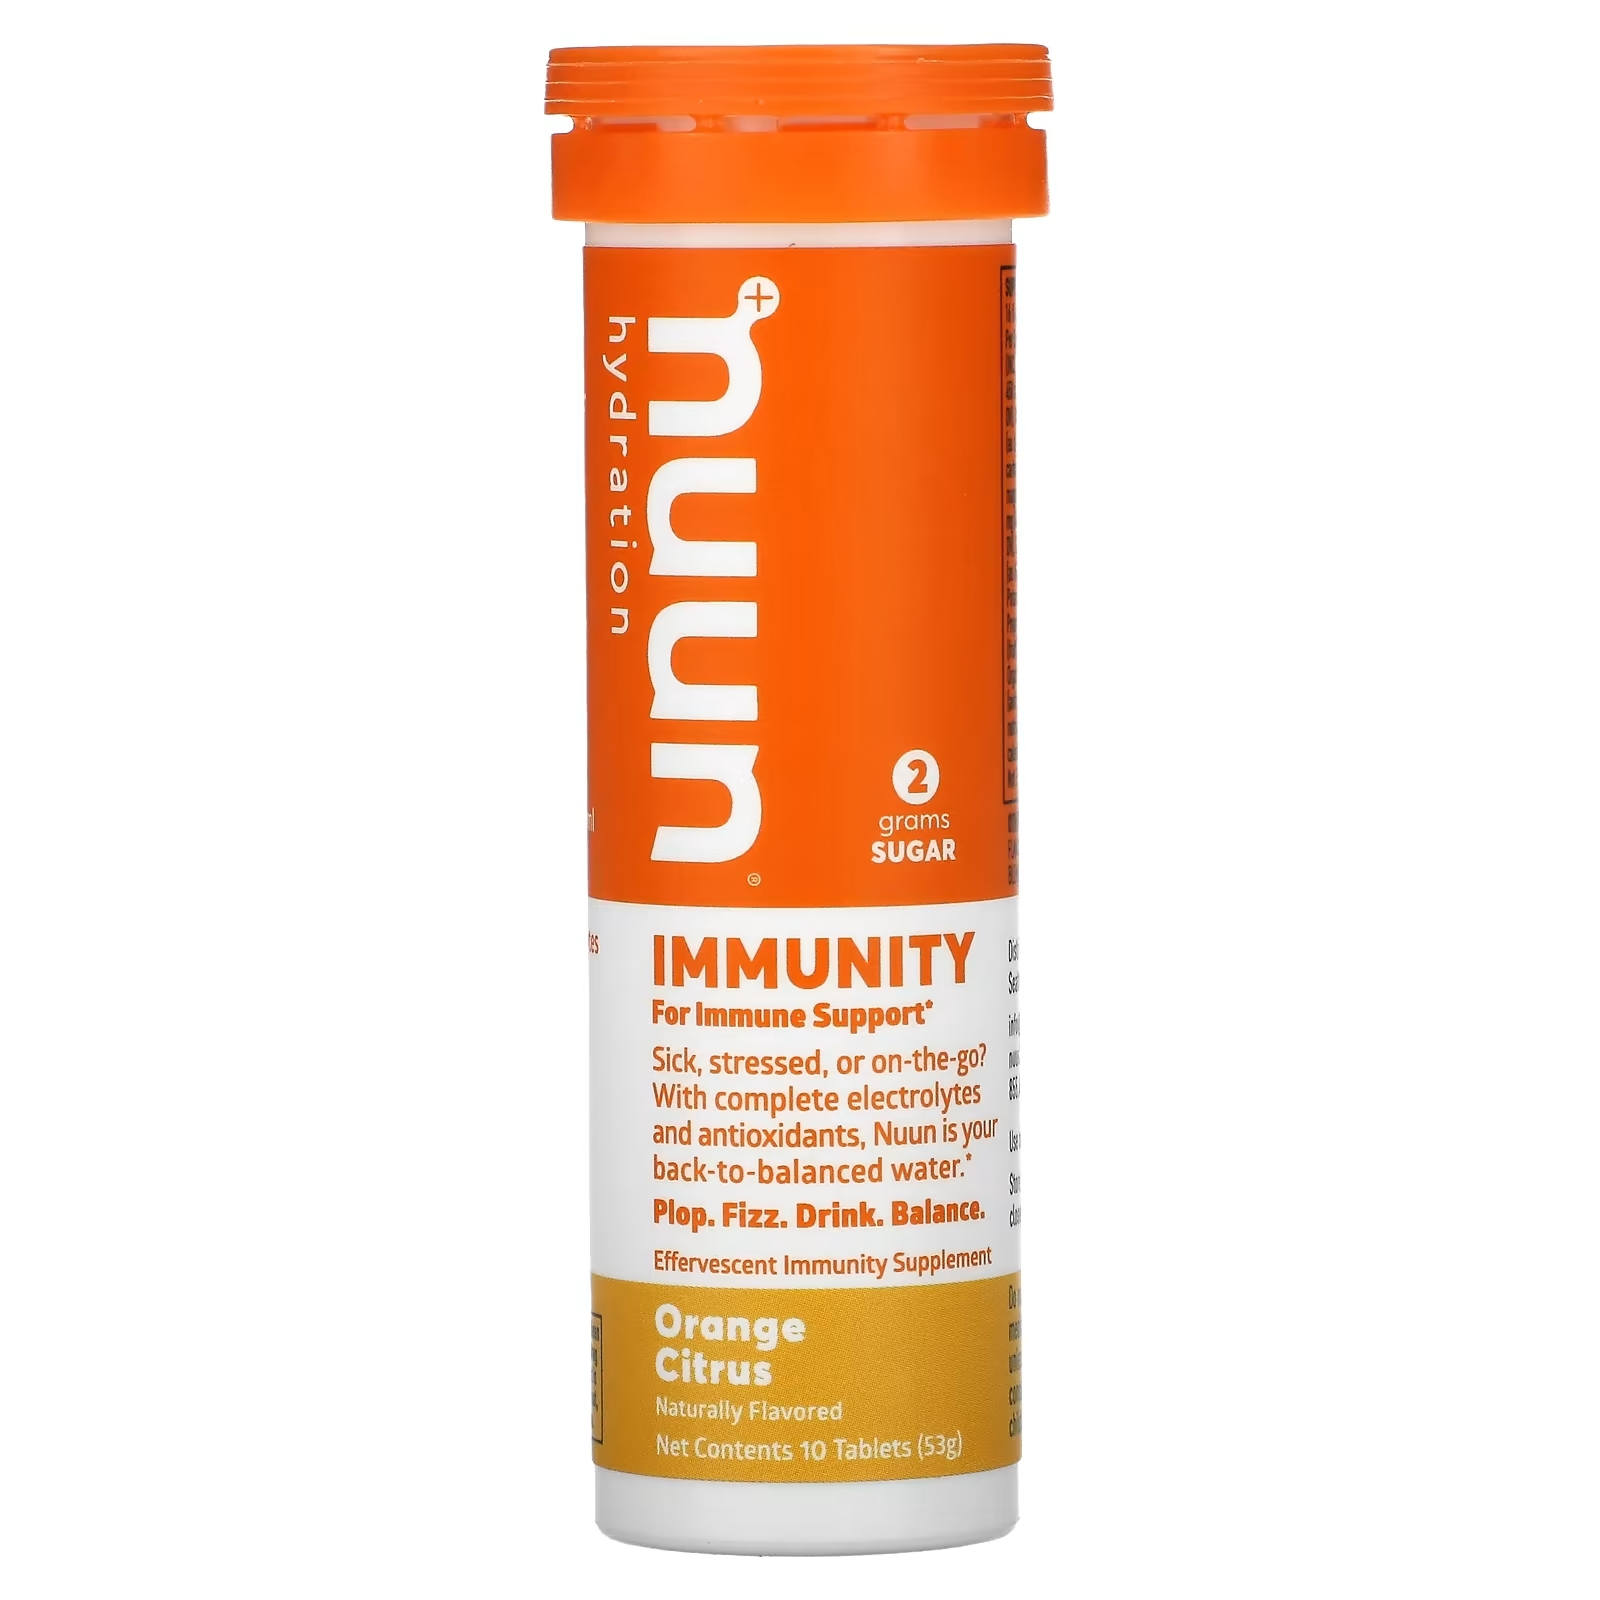 Nuun Hydration Immunity Шипучая добавка для иммунитета апельсин и цитрус, 10 таблеток nuun hydration витамины и кофеин шипучая витаминная добавка ежевика и цитрус 12 таблеток